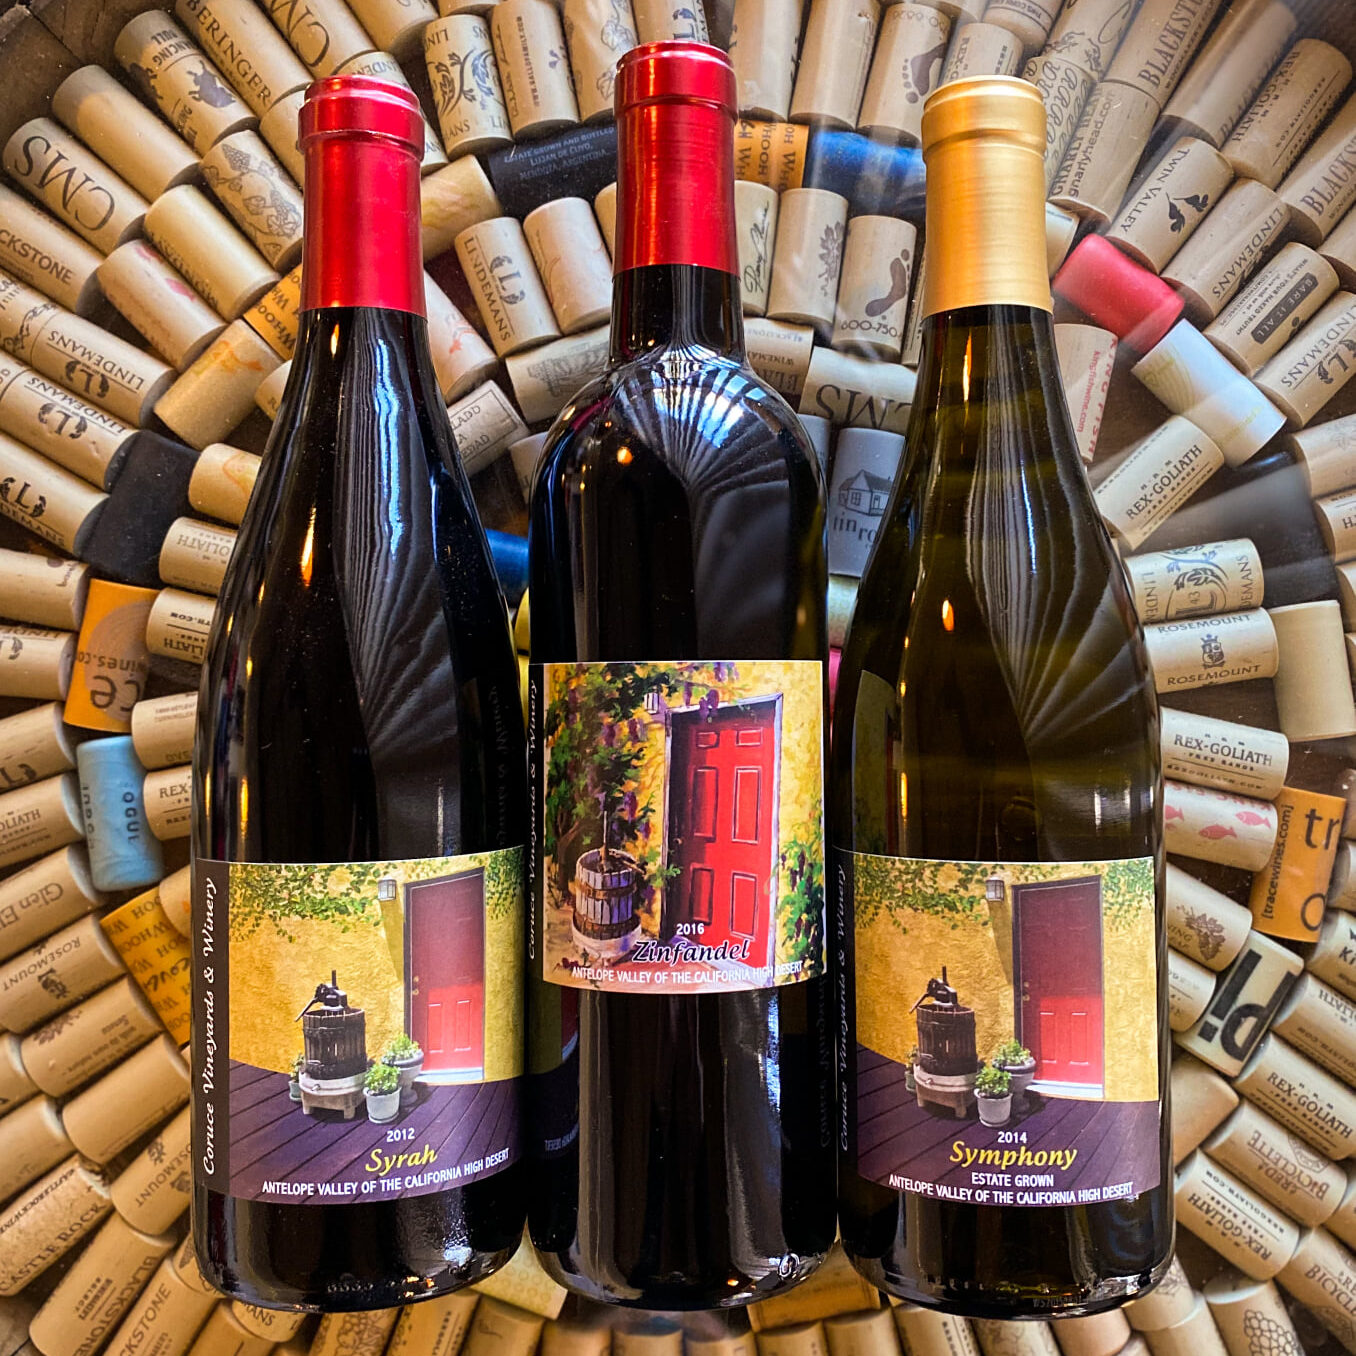 Syrah, Zinfandel, and Symphony wine bottles